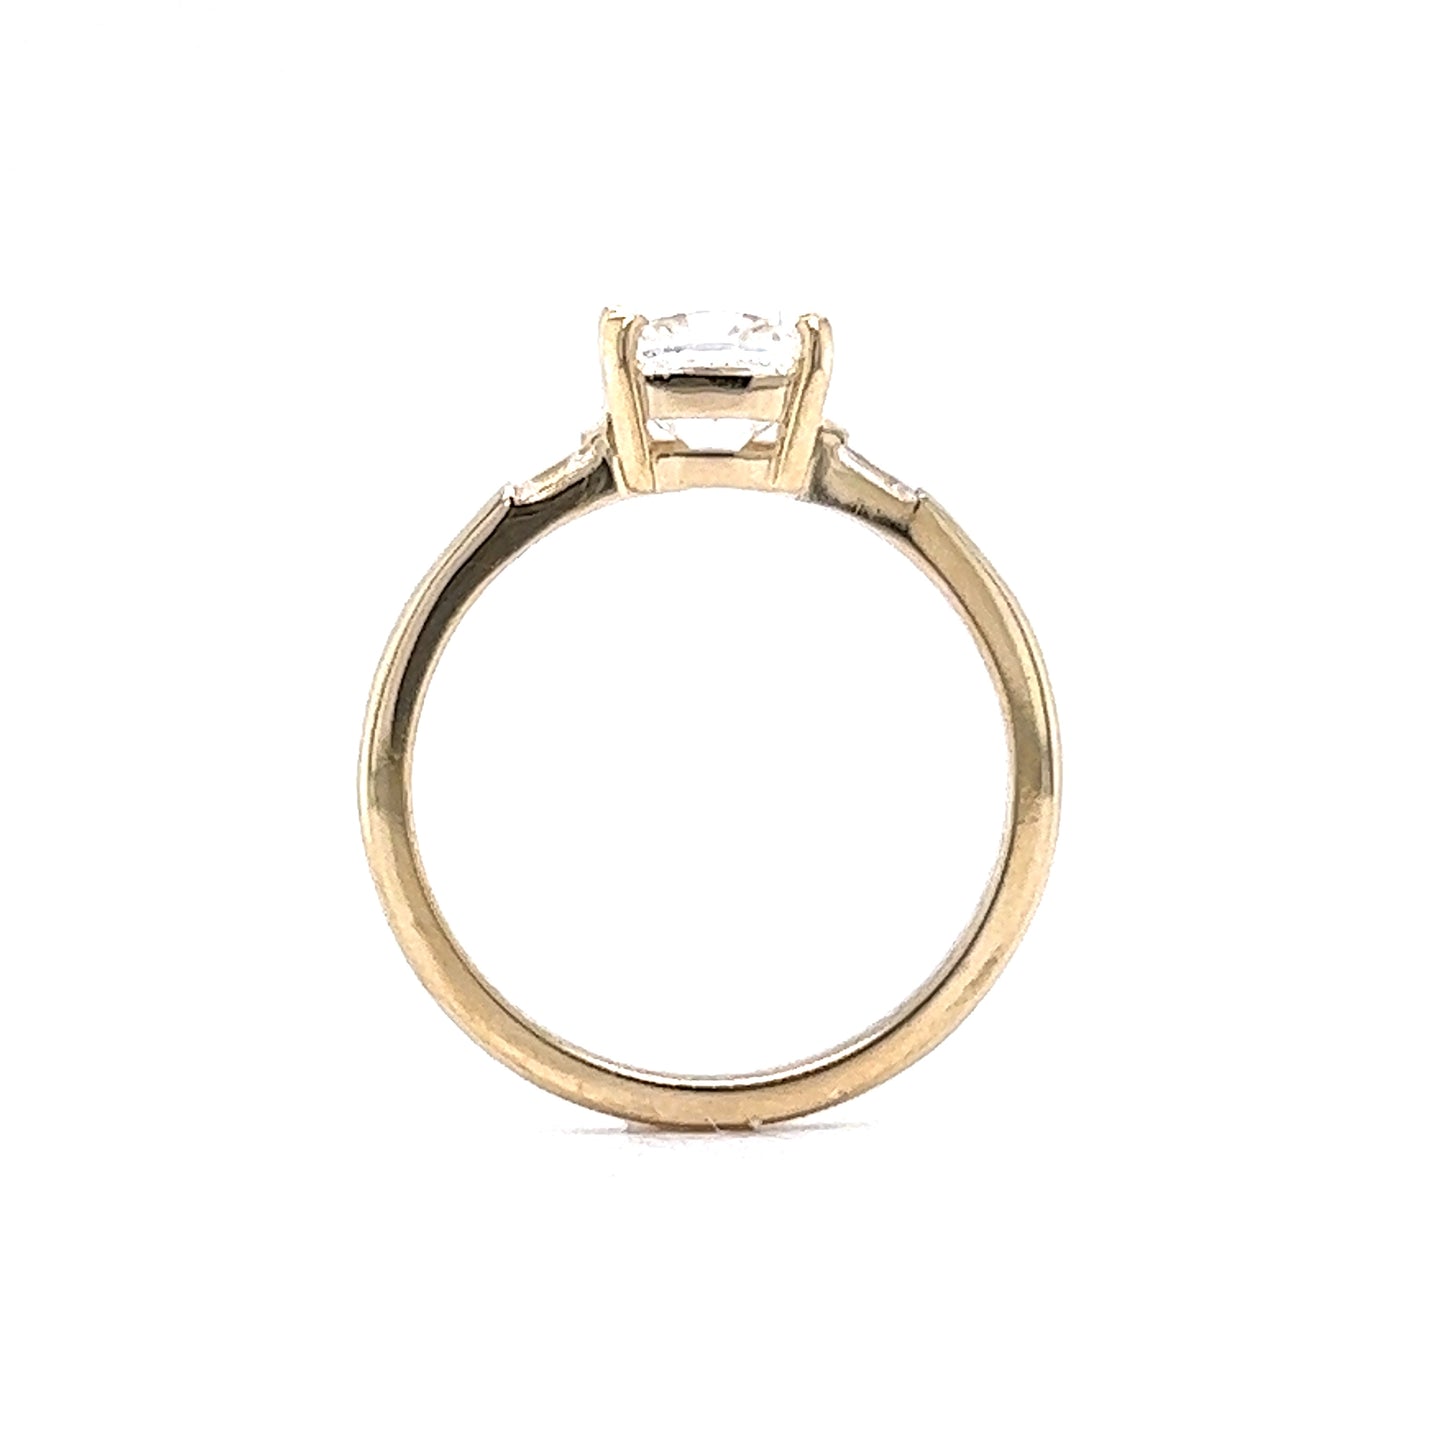 1.51 Cushion Cut Diamond Engagement Ring in 14k Yellow Gold